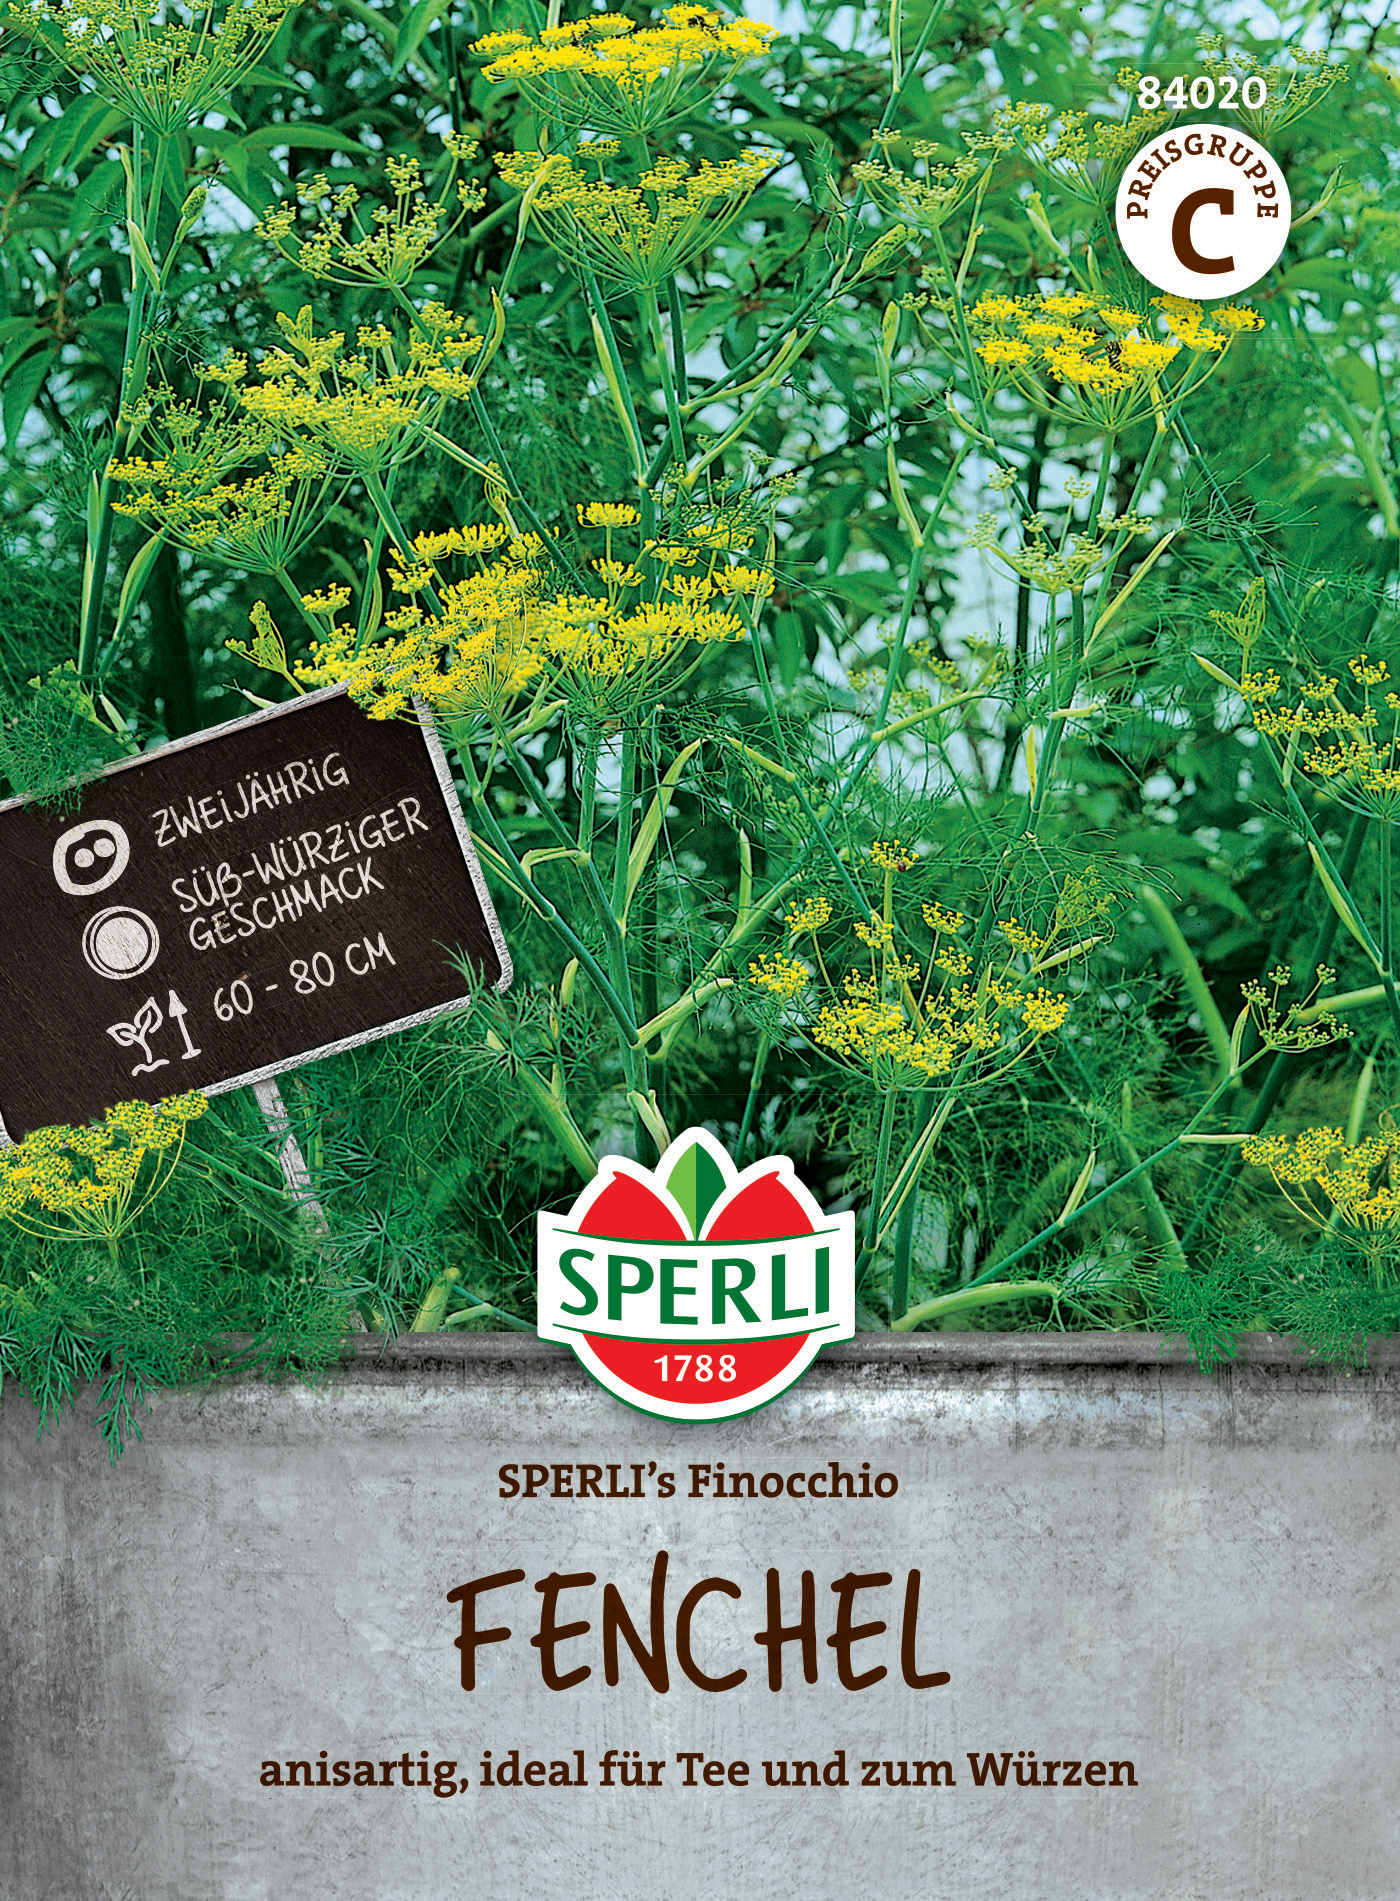 Fenchel SPERLI's Finocchio